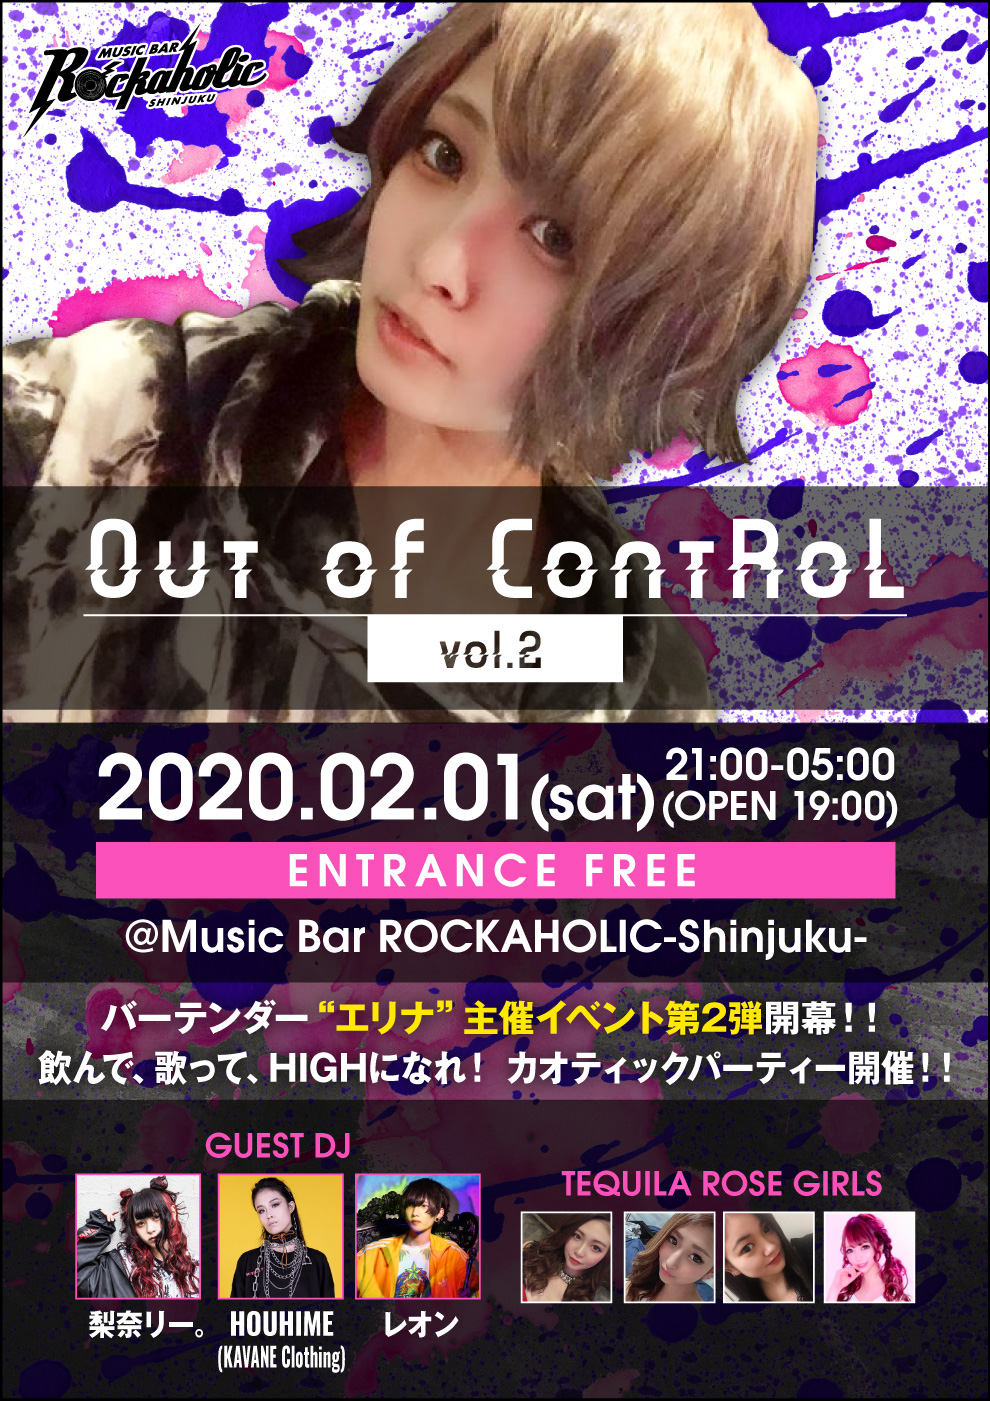 https://bar-rockaholic.jp/shinjuku/blog/EOtas-RWAAEMfEr.jpg